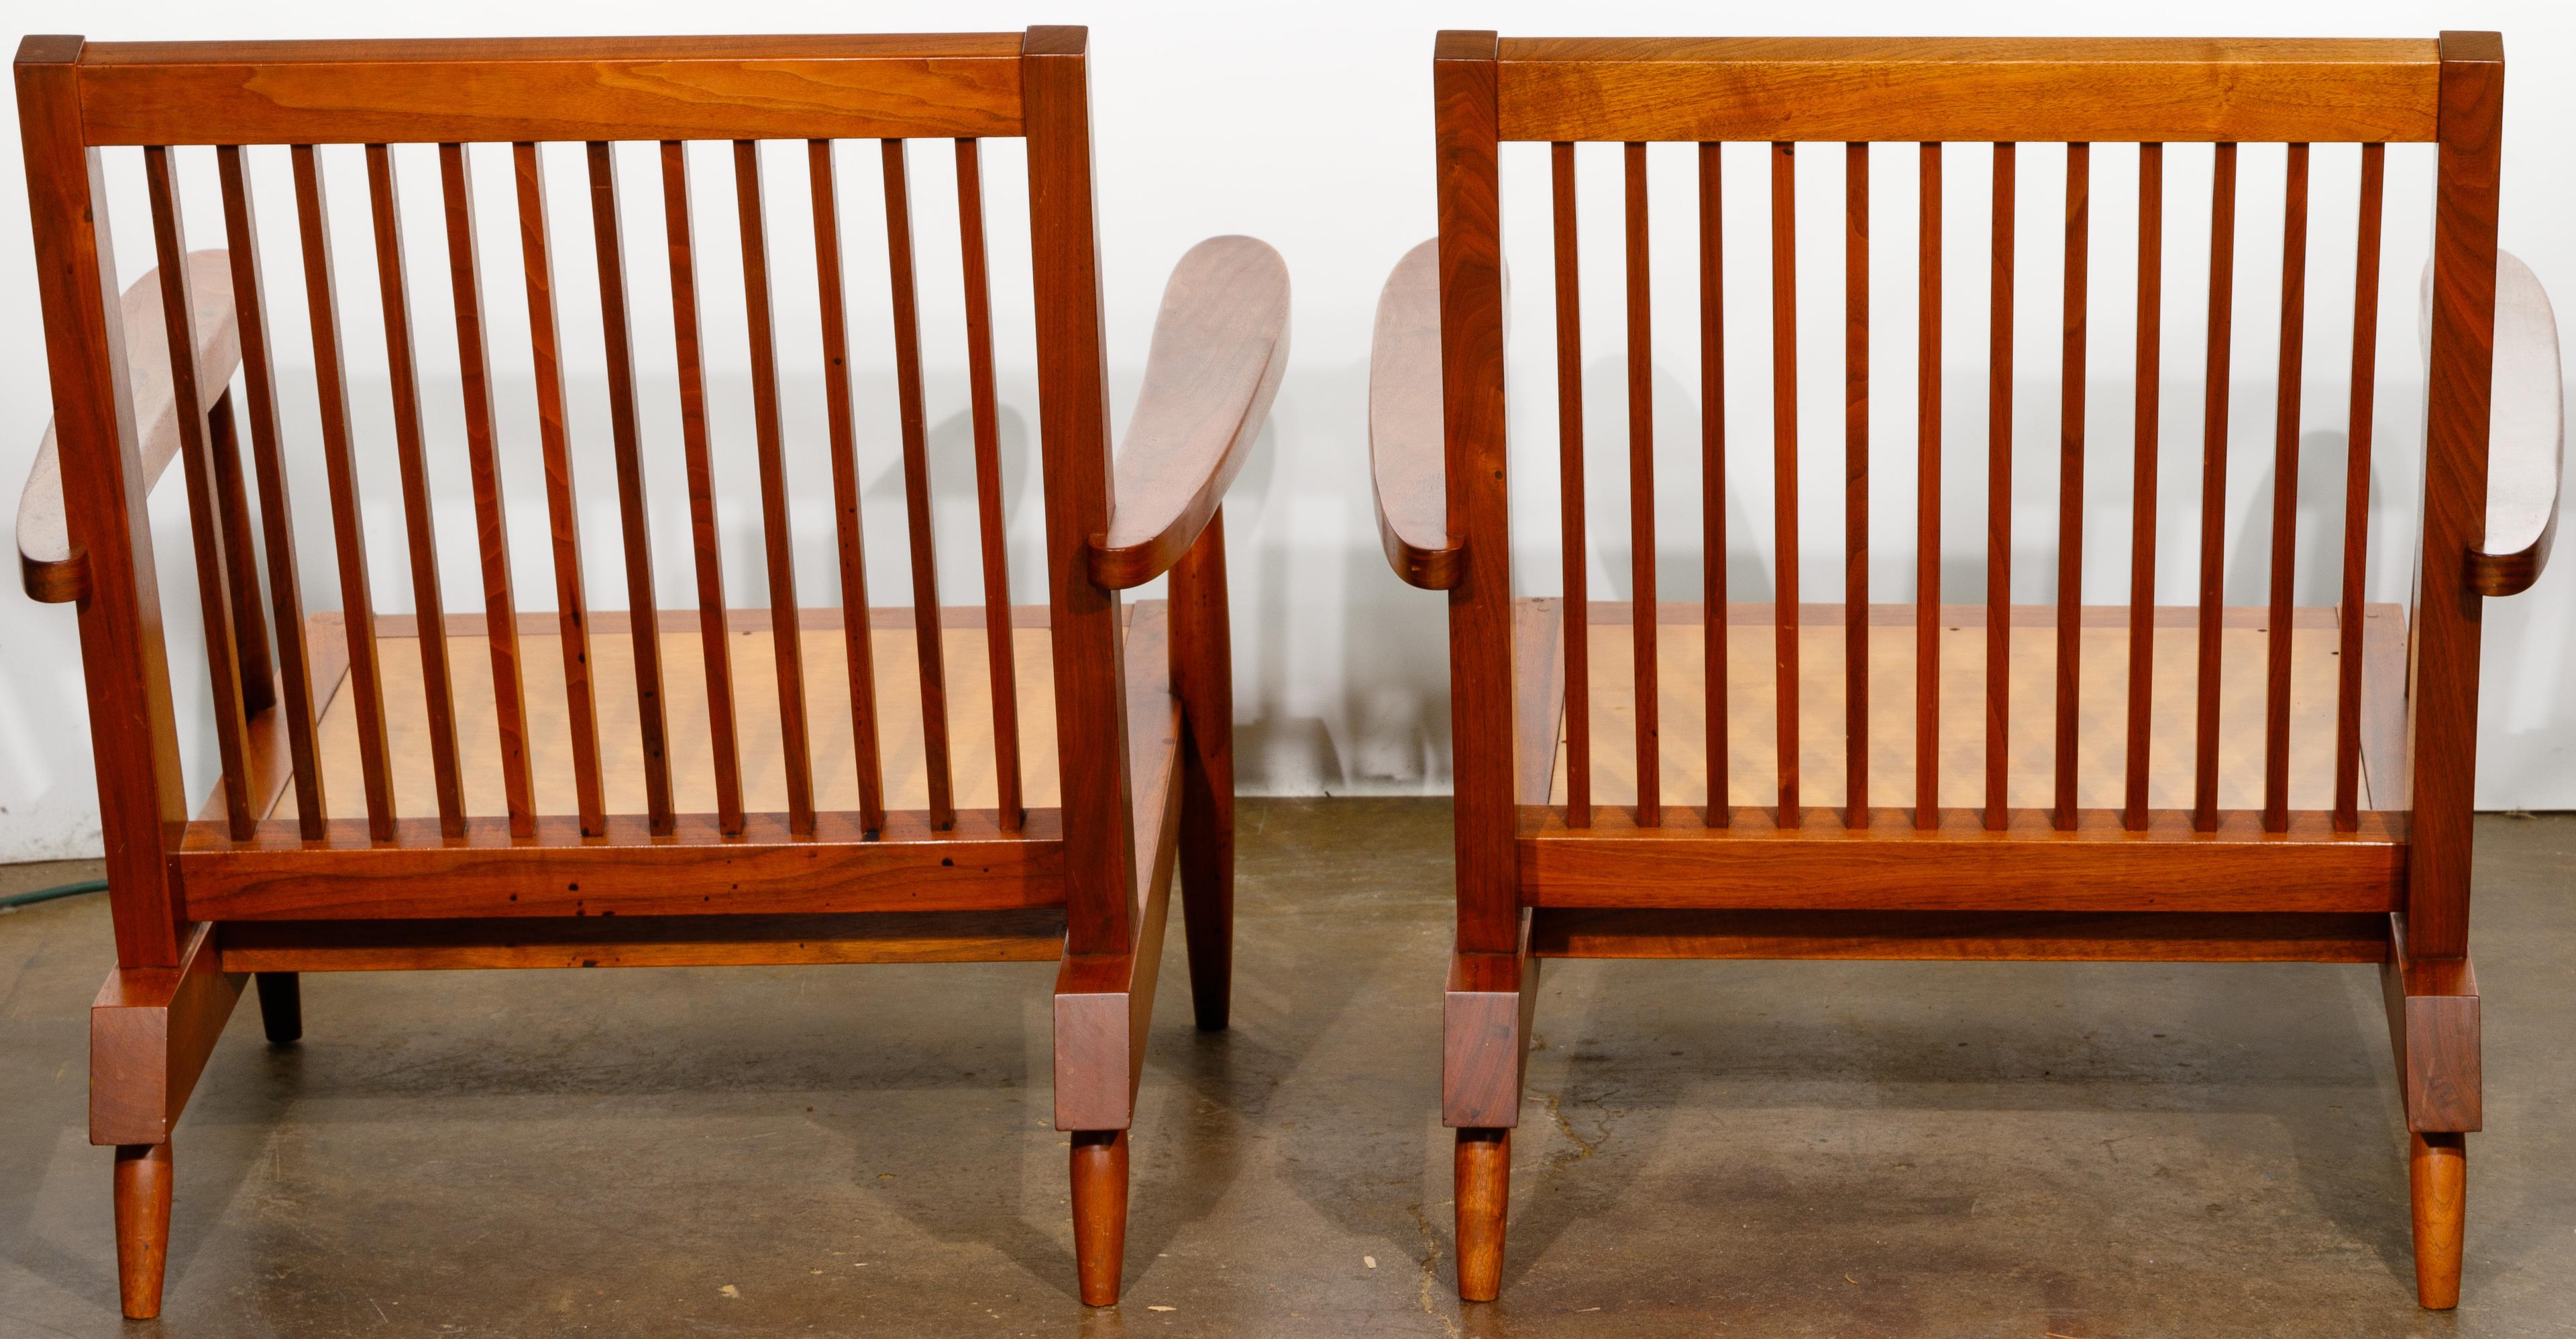 George Nakashima Cushion Chairs with Arms